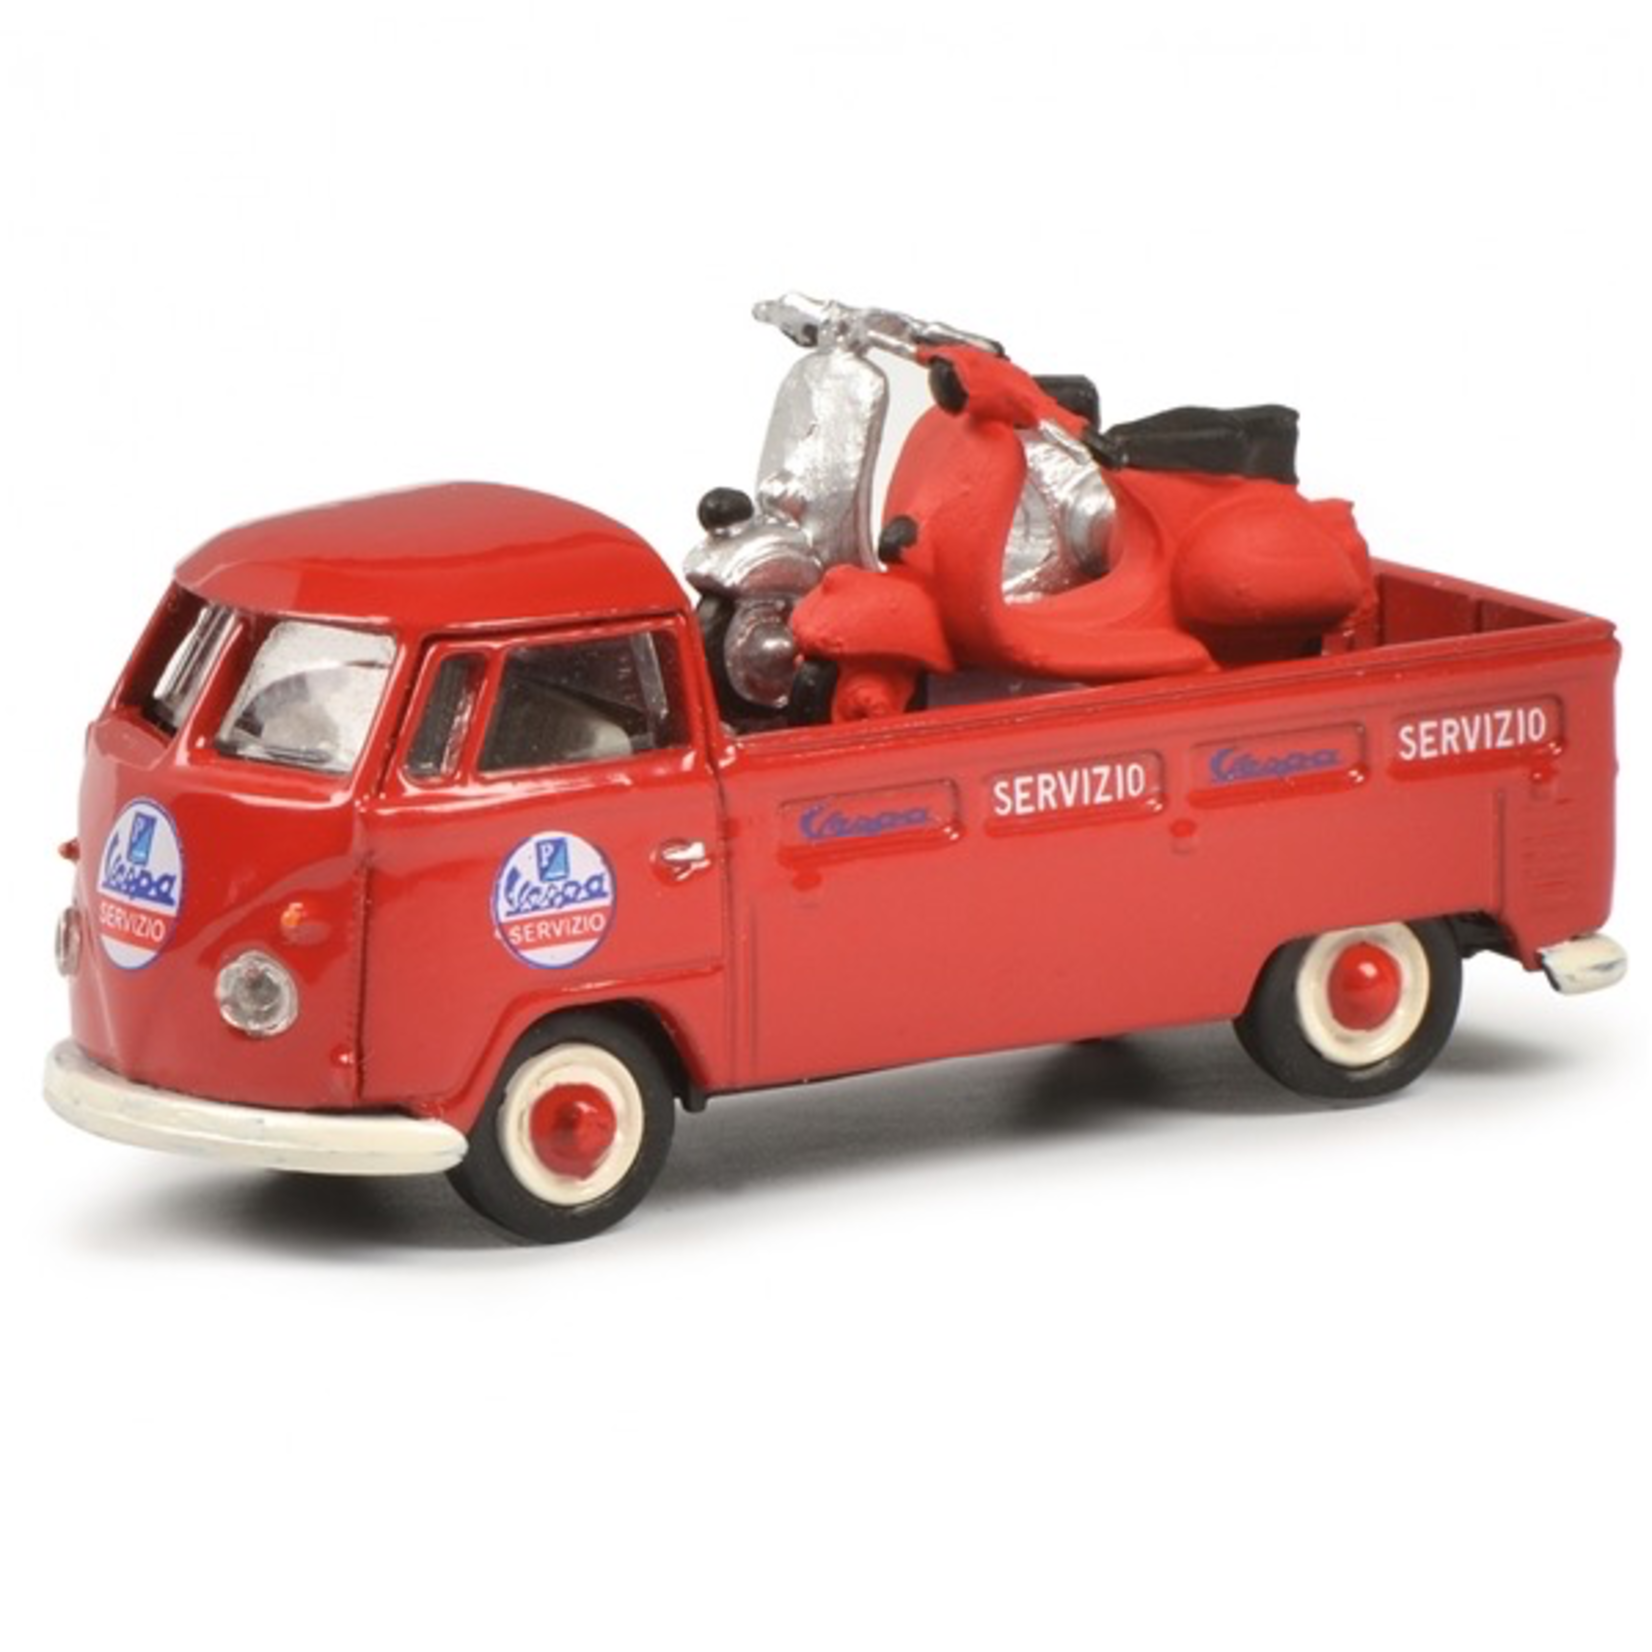 Lifestyle Toy, Schuco Vespa VW service truck (Limited 500 edition)